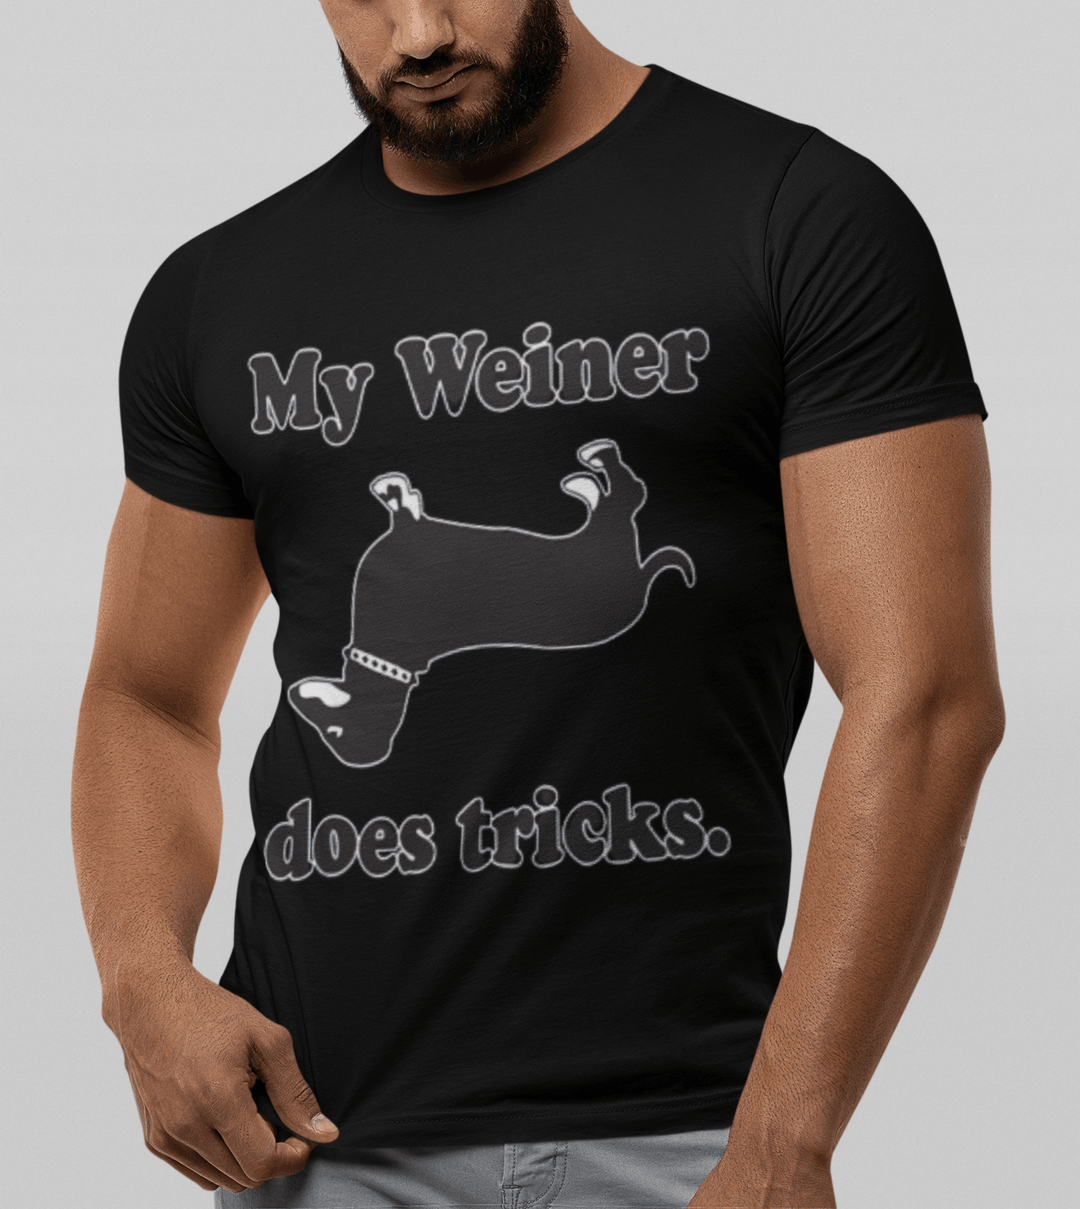 Funny Pet Owner T-shirt My Weiner Does Tricks Short Sleeve Crewneck Ultra Soft Cotton Top - TopKoalaTee